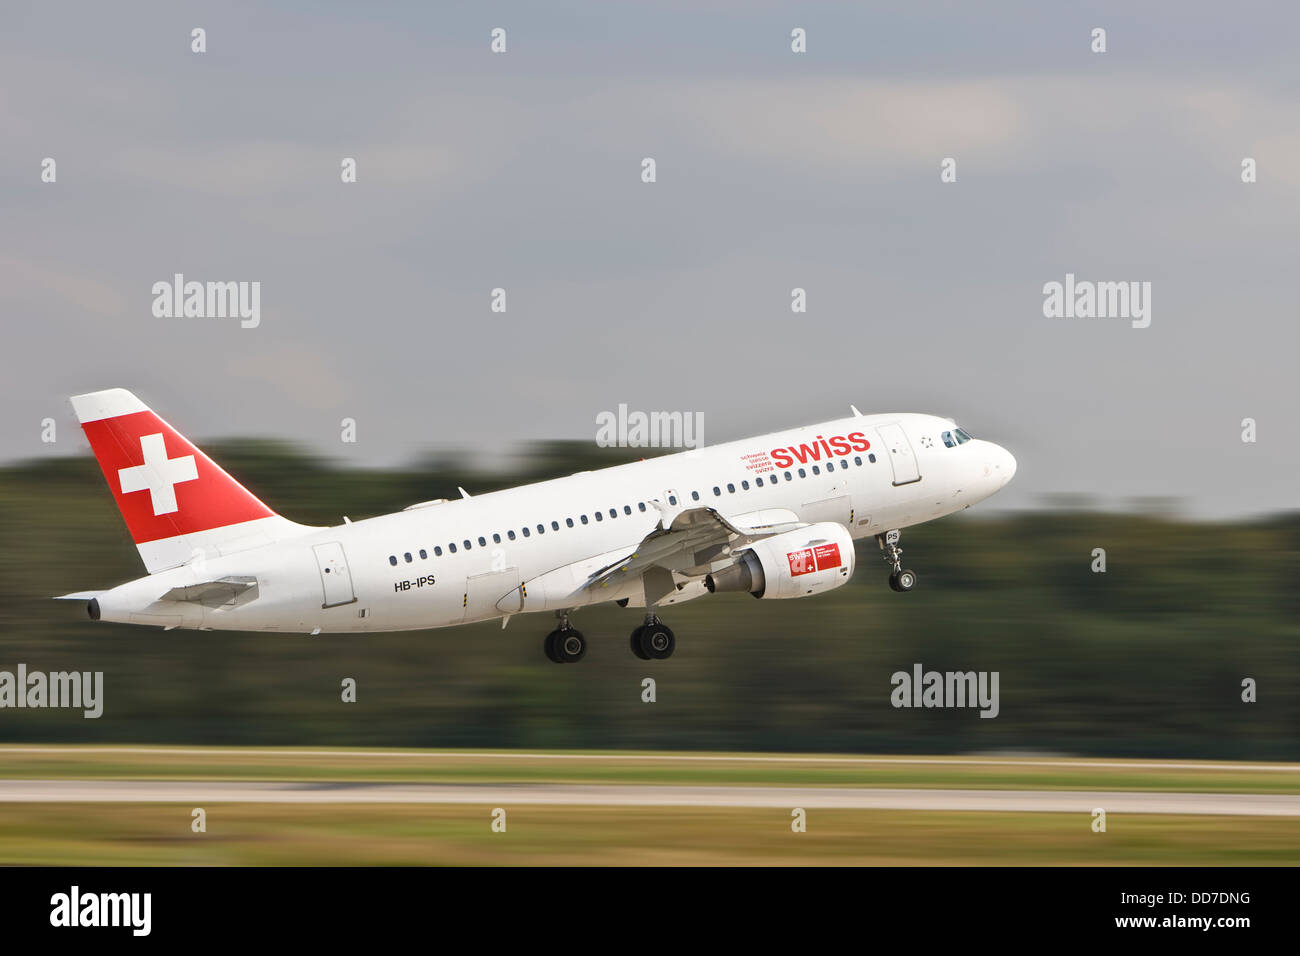 Germany, Hesse, View of Aeroplane on runway Stock Photo